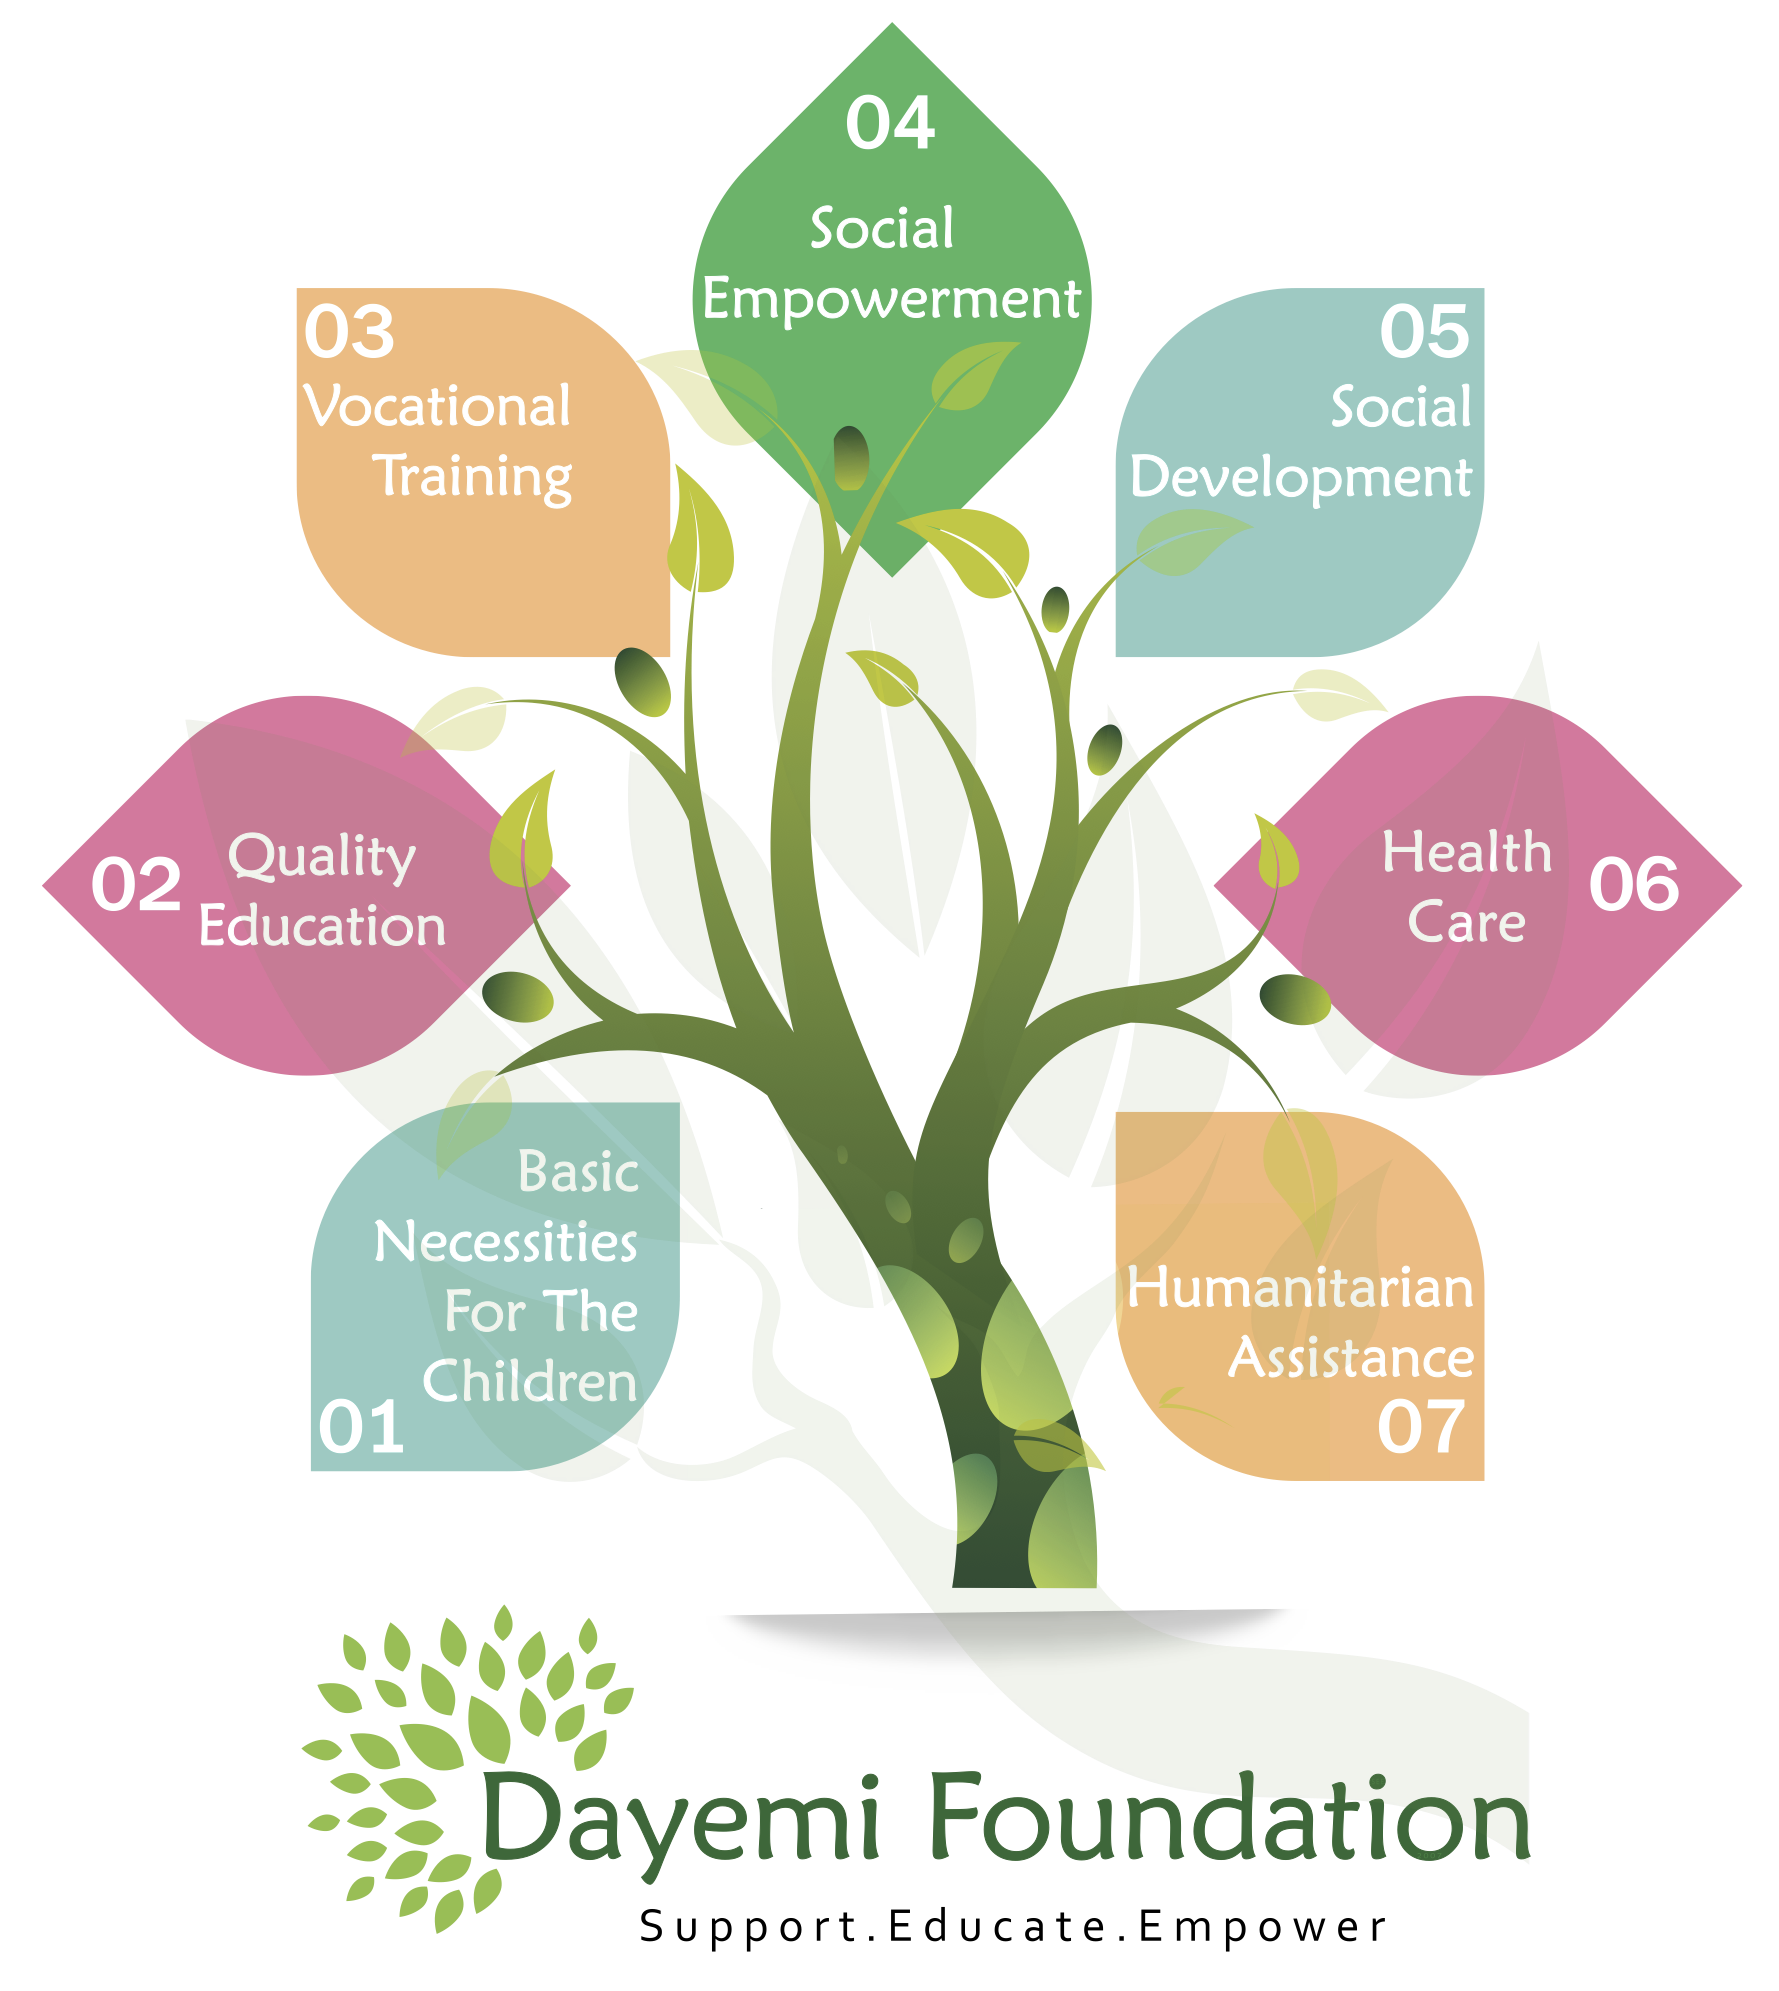 File:Dayemi Foundation Tree.png.